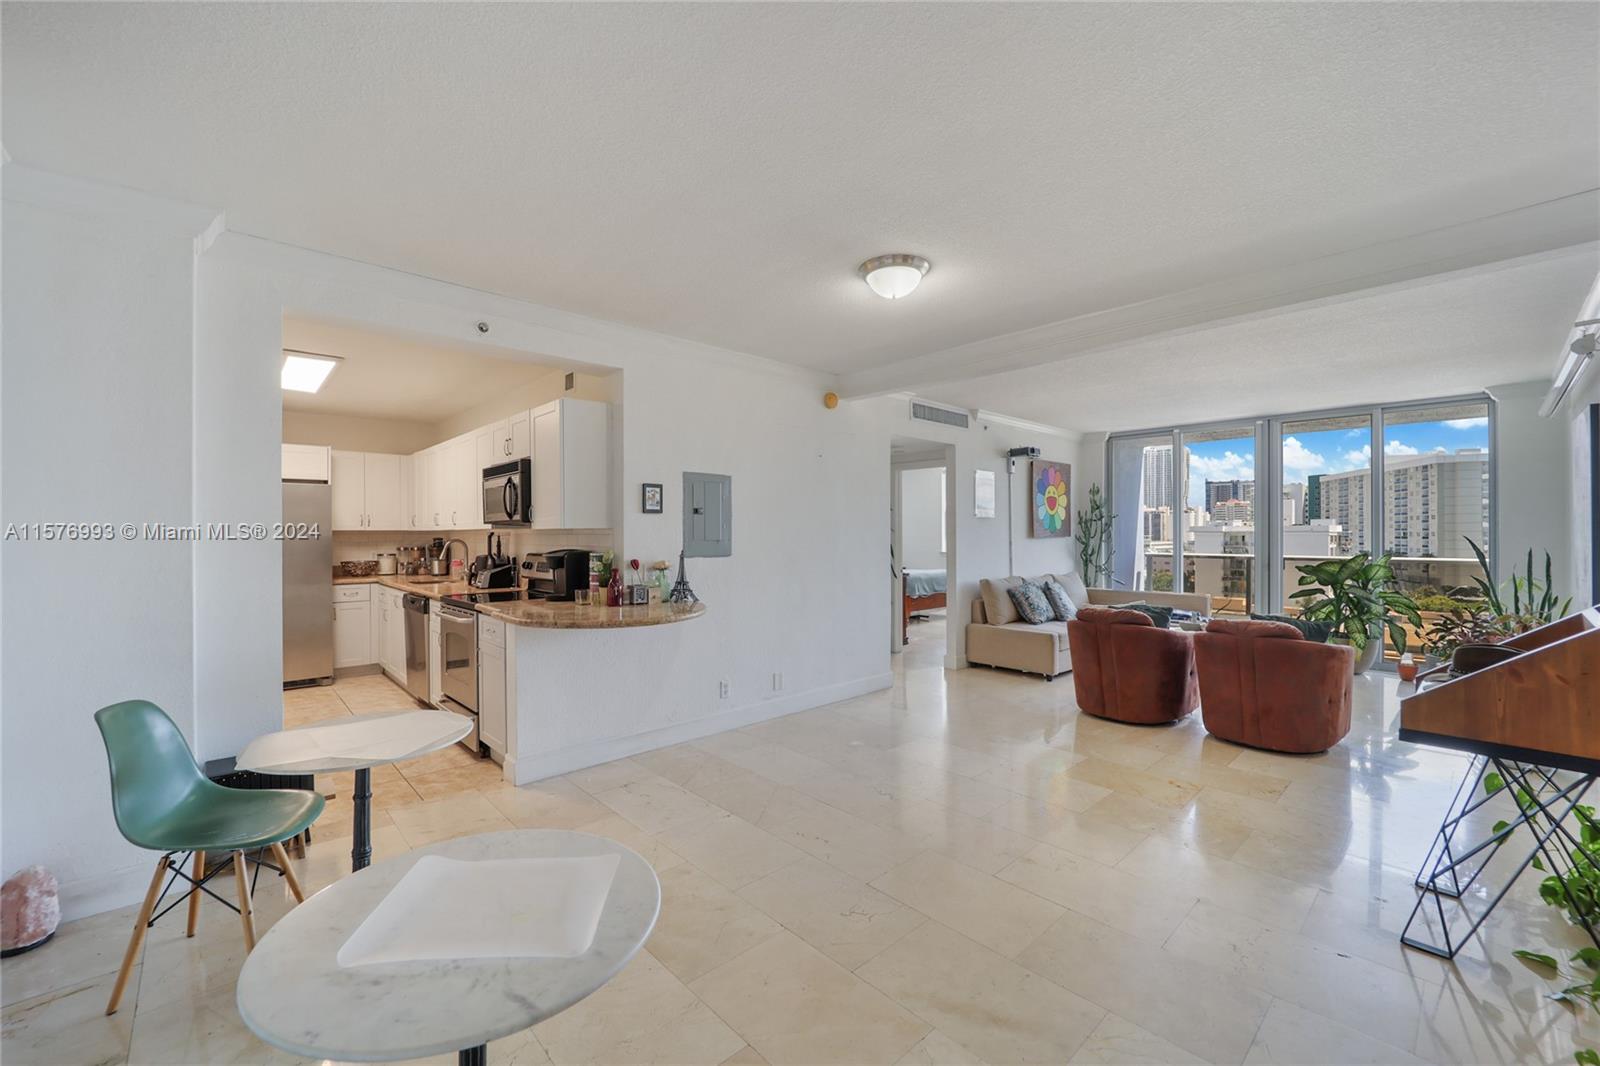 Rental Property at 401 69th St St 812, Miami Beach, Miami-Dade County, Florida - Bedrooms: 2 
Bathrooms: 2  - $3,600 MO.